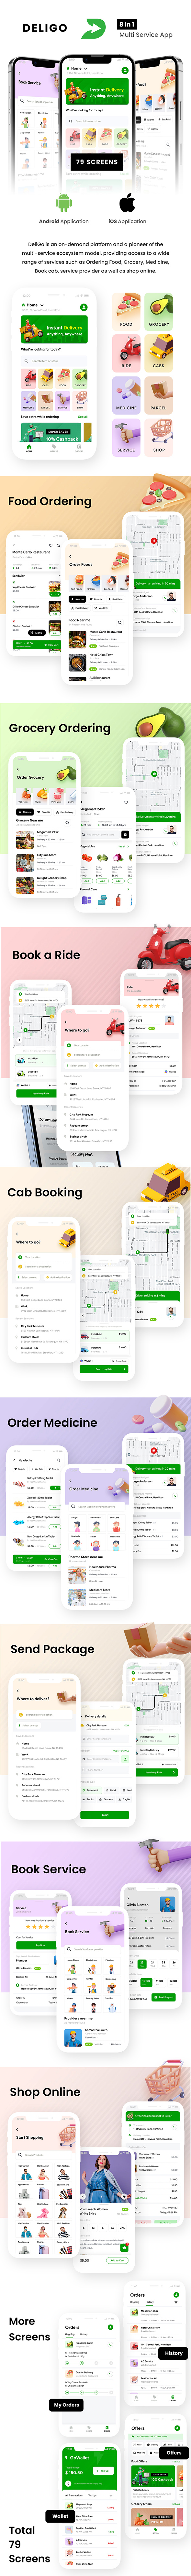 8 in 1 Multi-service App Template | Cab Booking| Handyman| eCommerce | Pharmacy Delivery App| DeliGo - 4